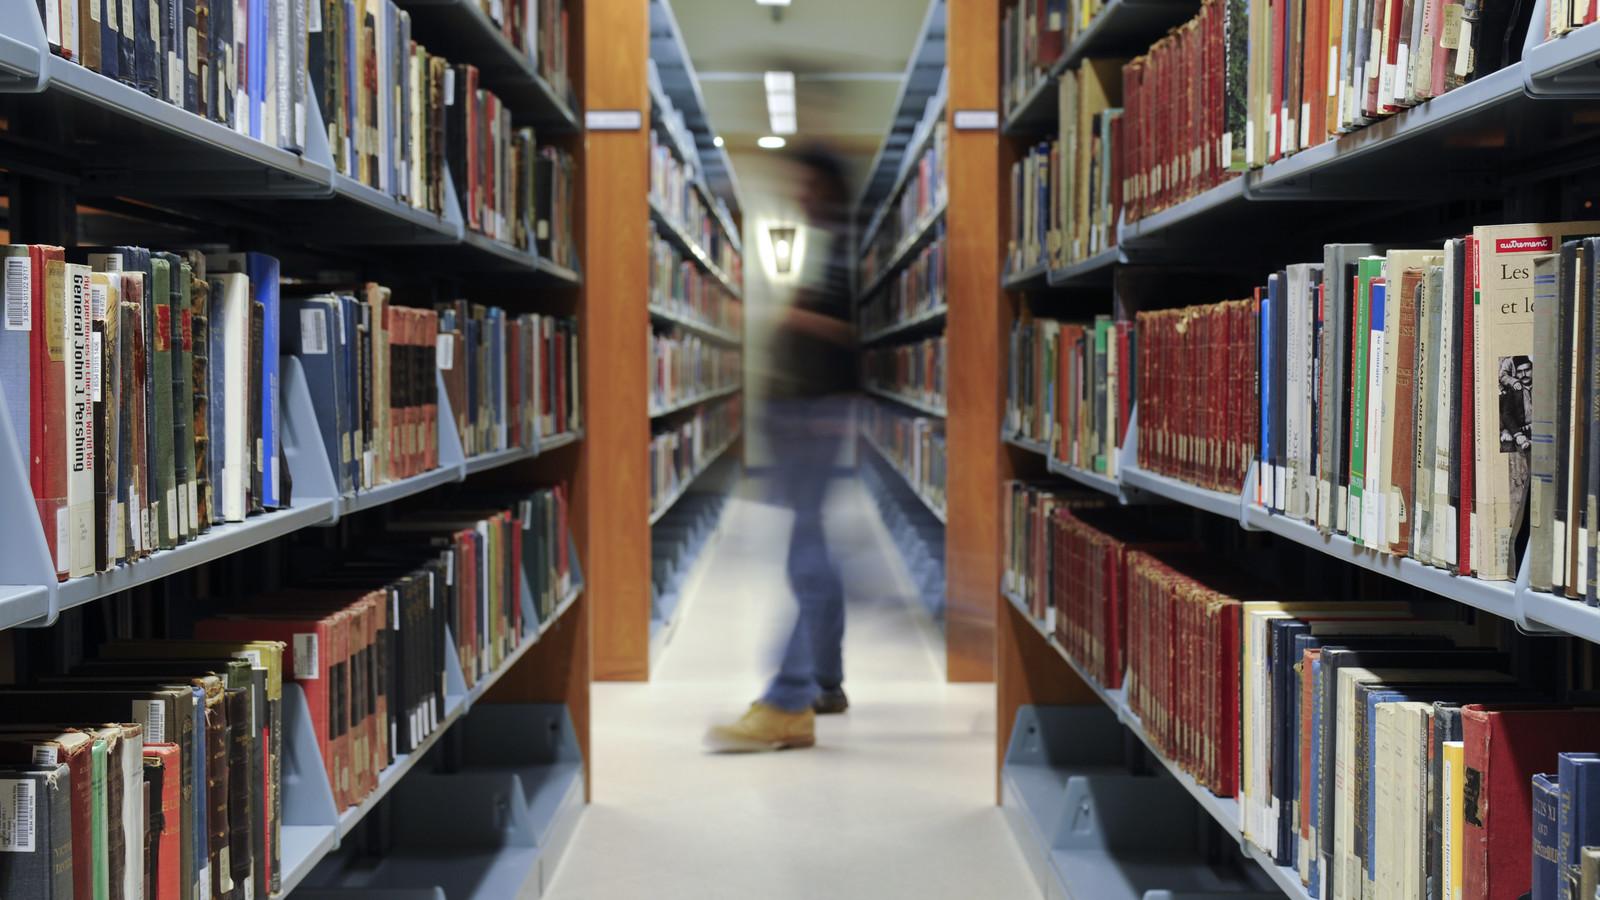 AUC library shelves